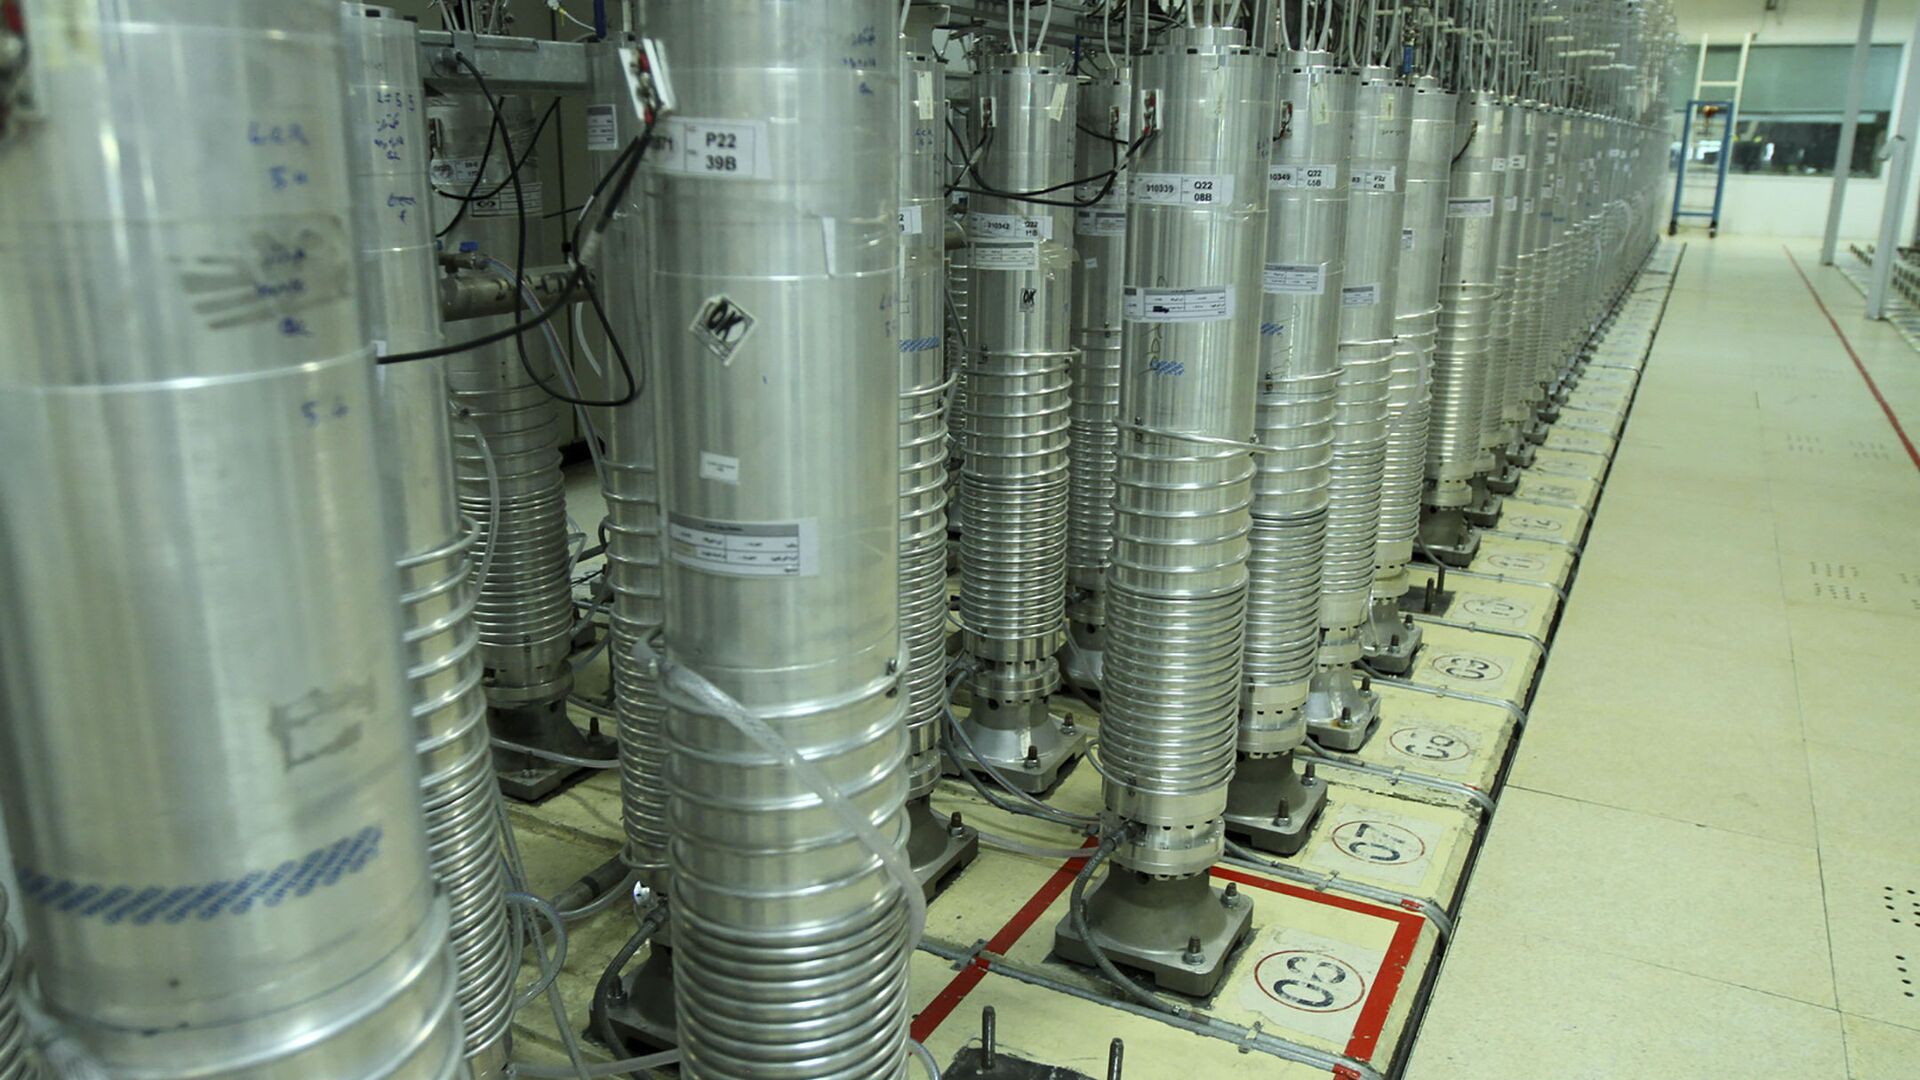 Centrifuge machines in Natanz uranium enrichment facility - Sputnik International, 1920, 11.04.2021